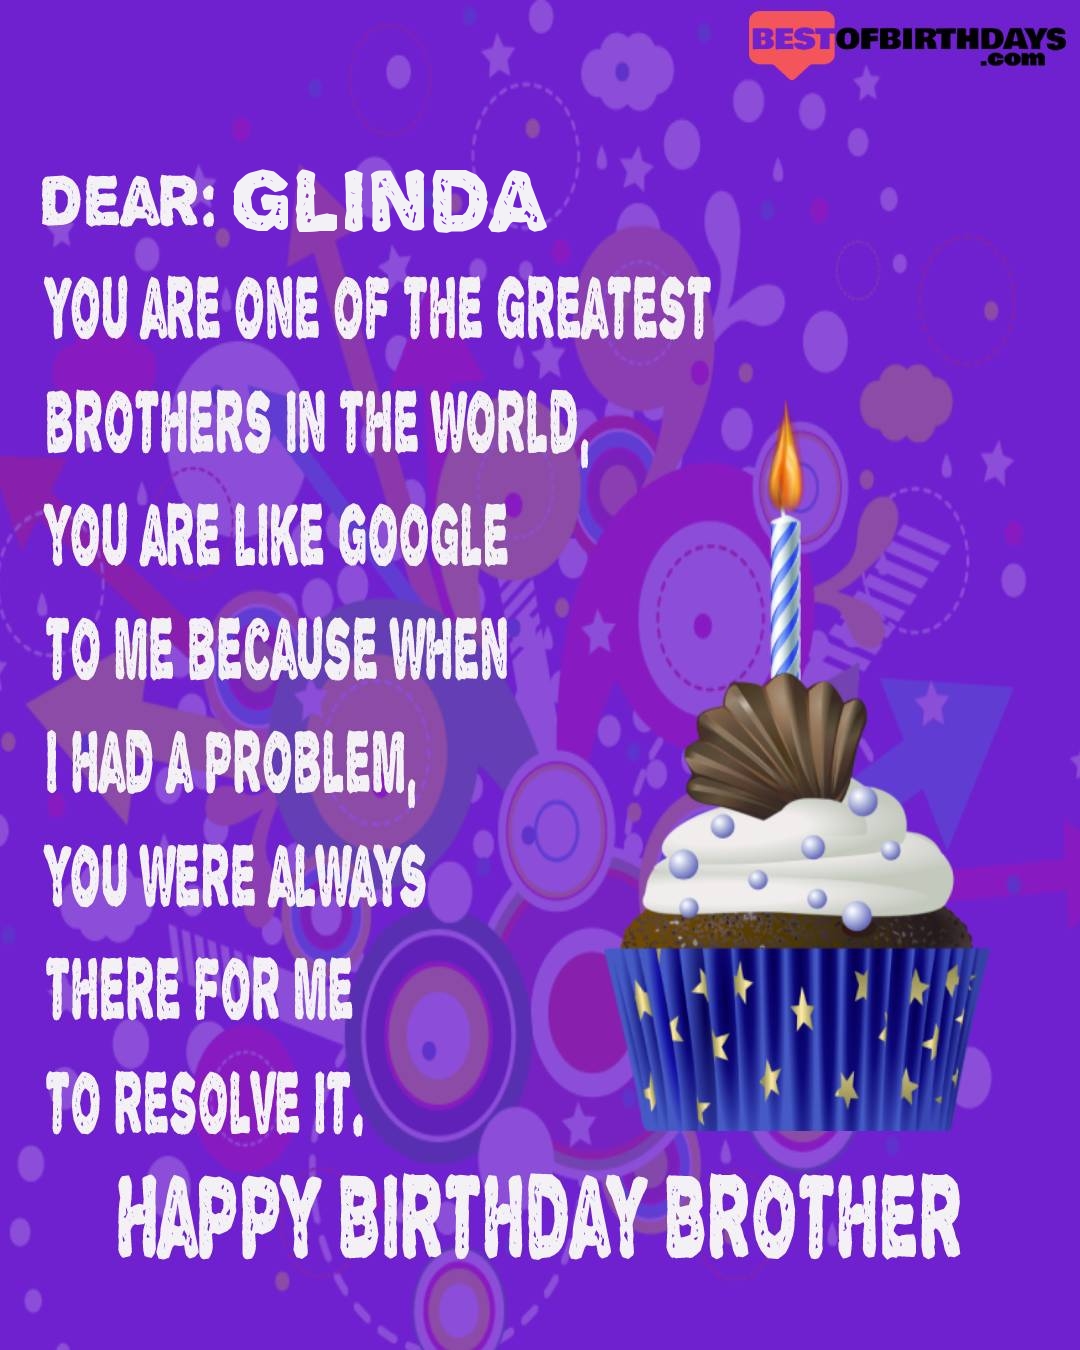 Happy birthday glinda bhai brother bro